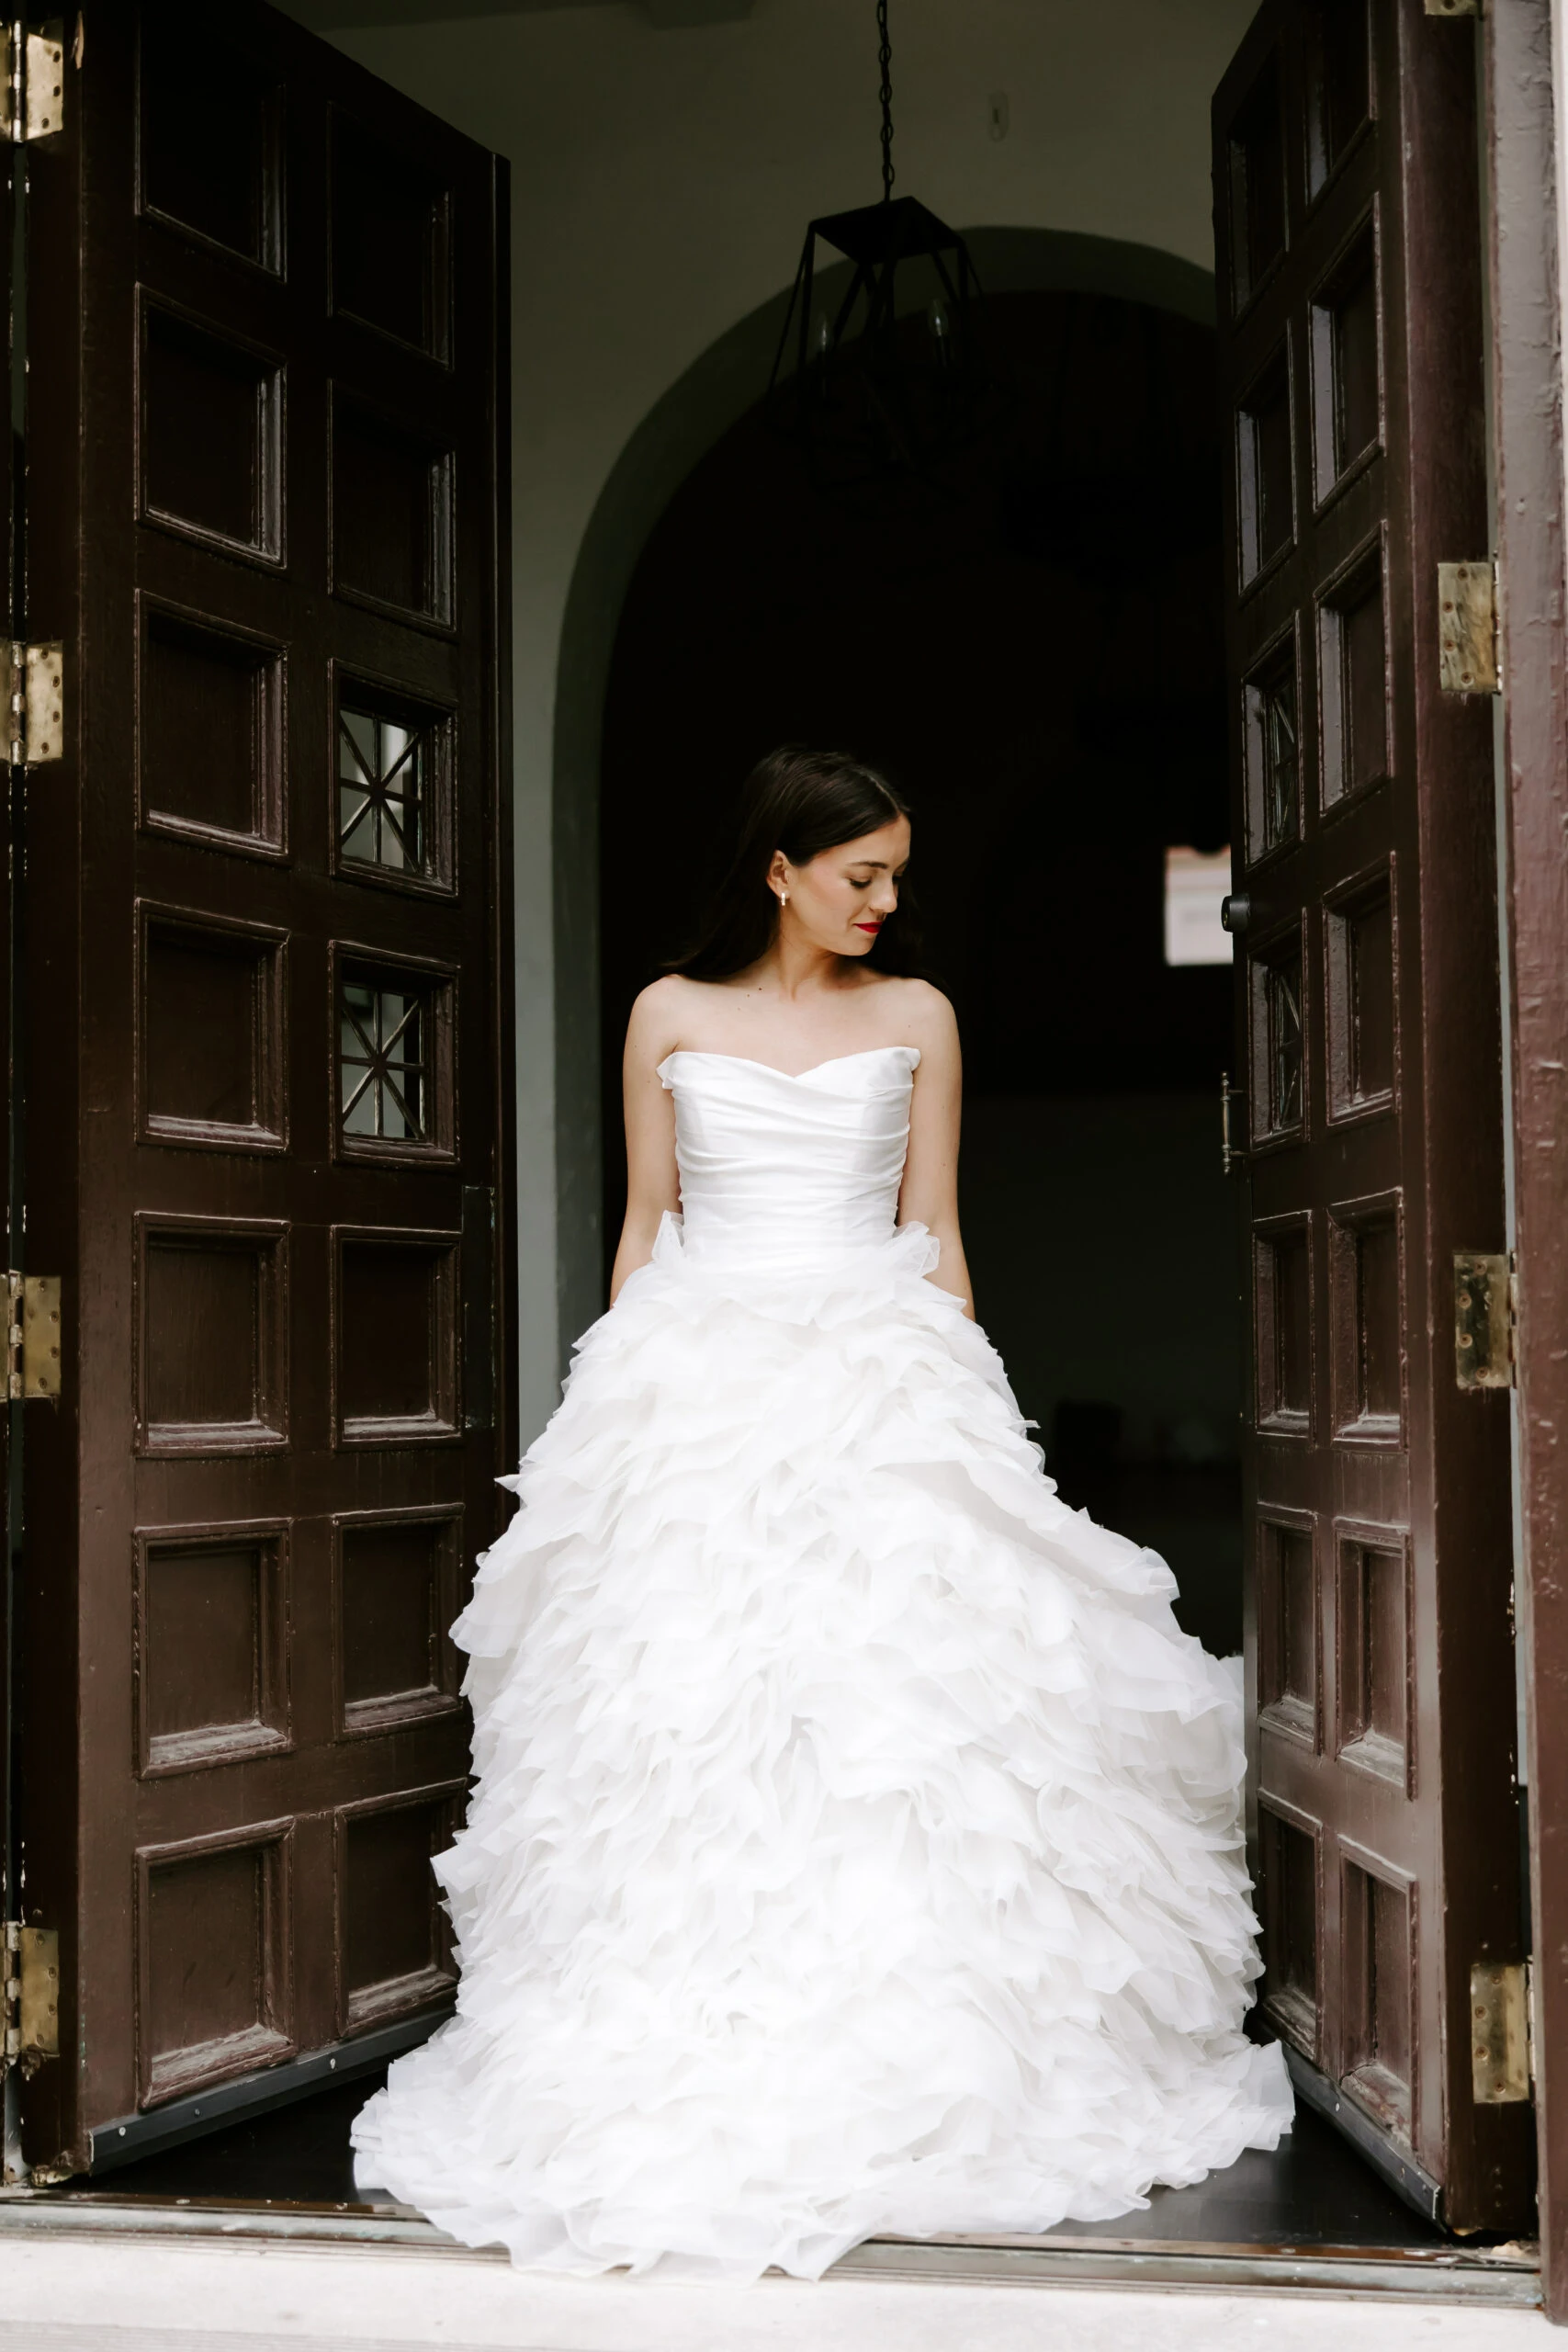 Bride standing in a doorway wearing a tulle ballgown wedding dress